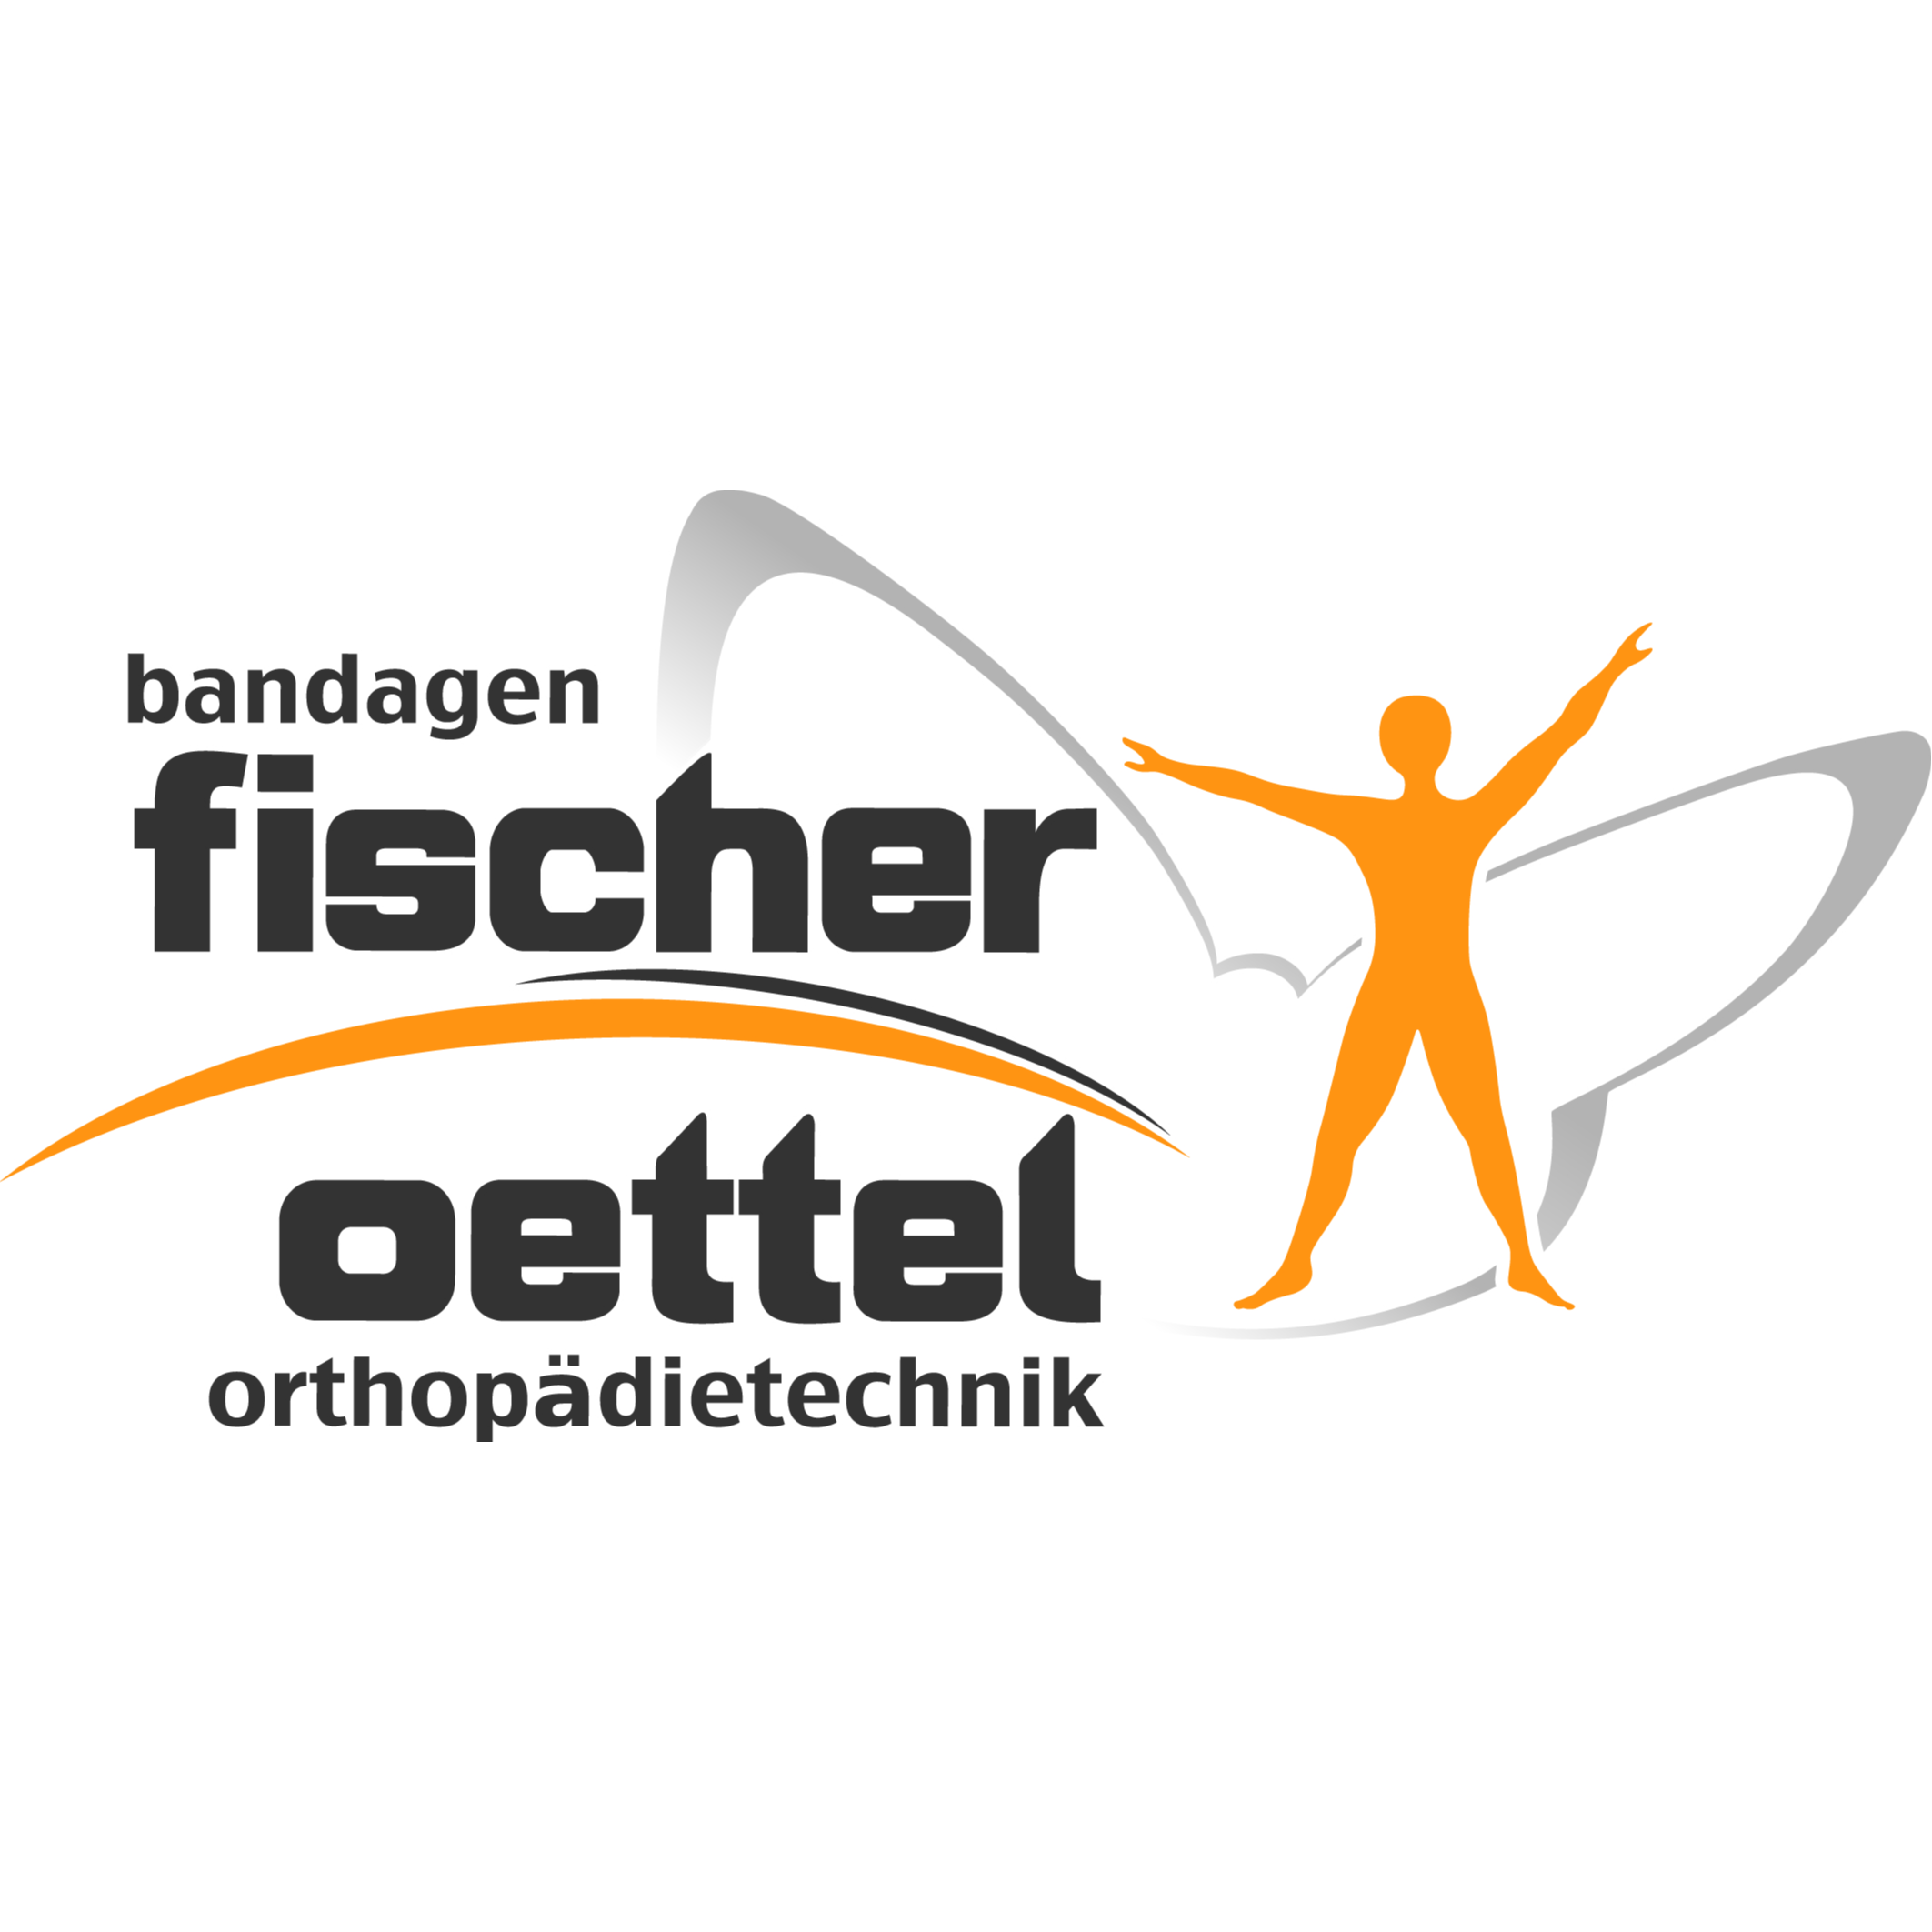 Bandagen Fischer Oettel Orthopädietechnik in Adorf im Vogtland - Logo